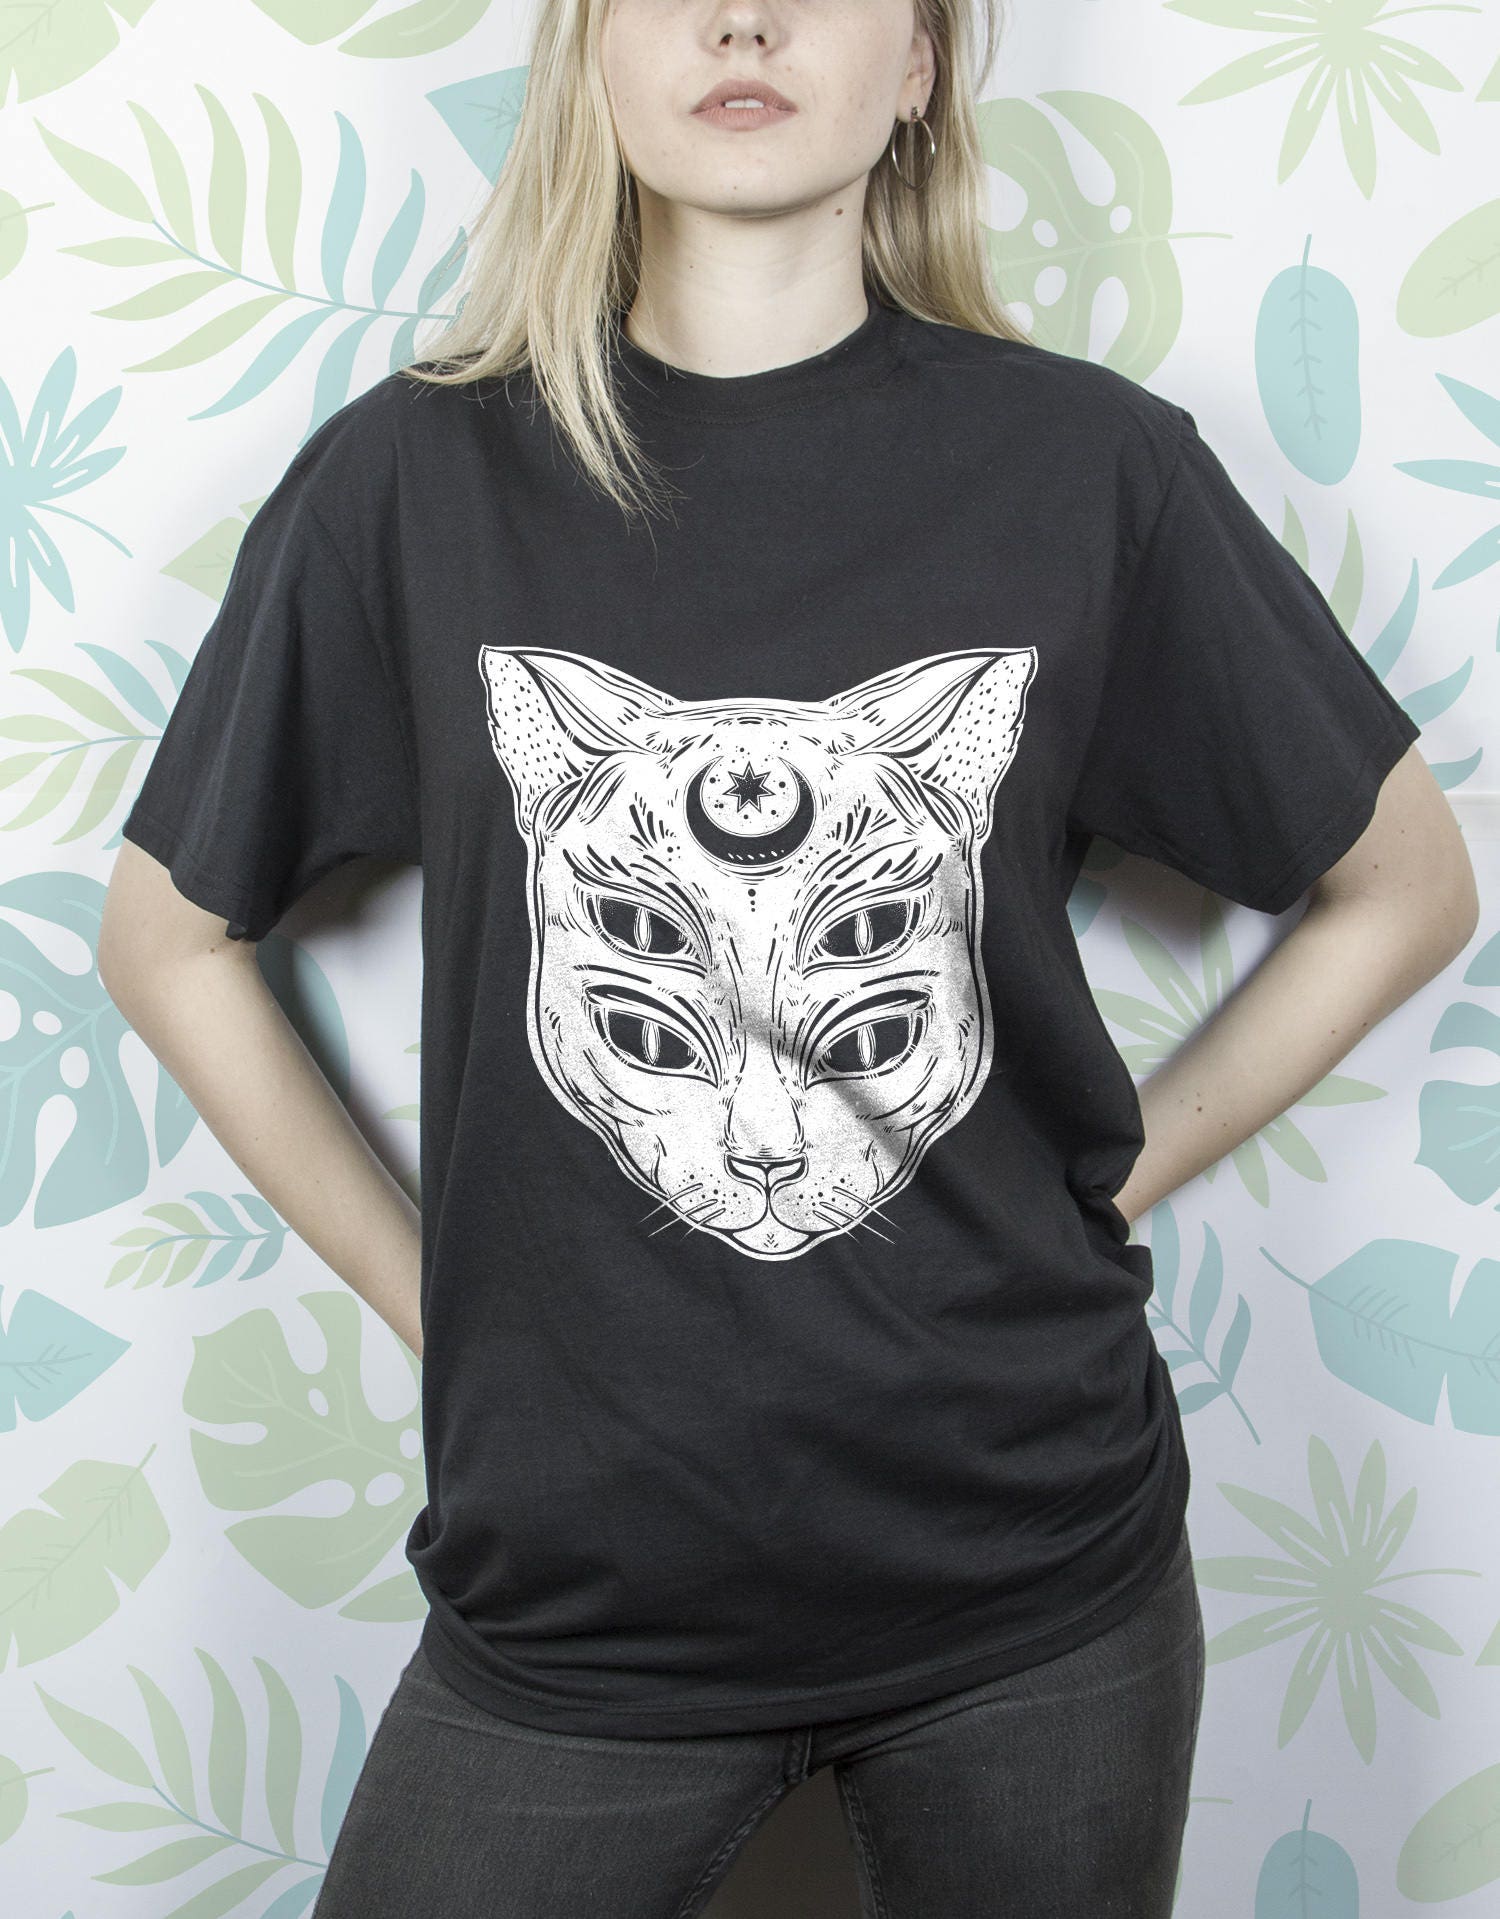 Creepy Shirt Shirt With Cat Creepy Cat Shirt Tshirt for Men - Etsy